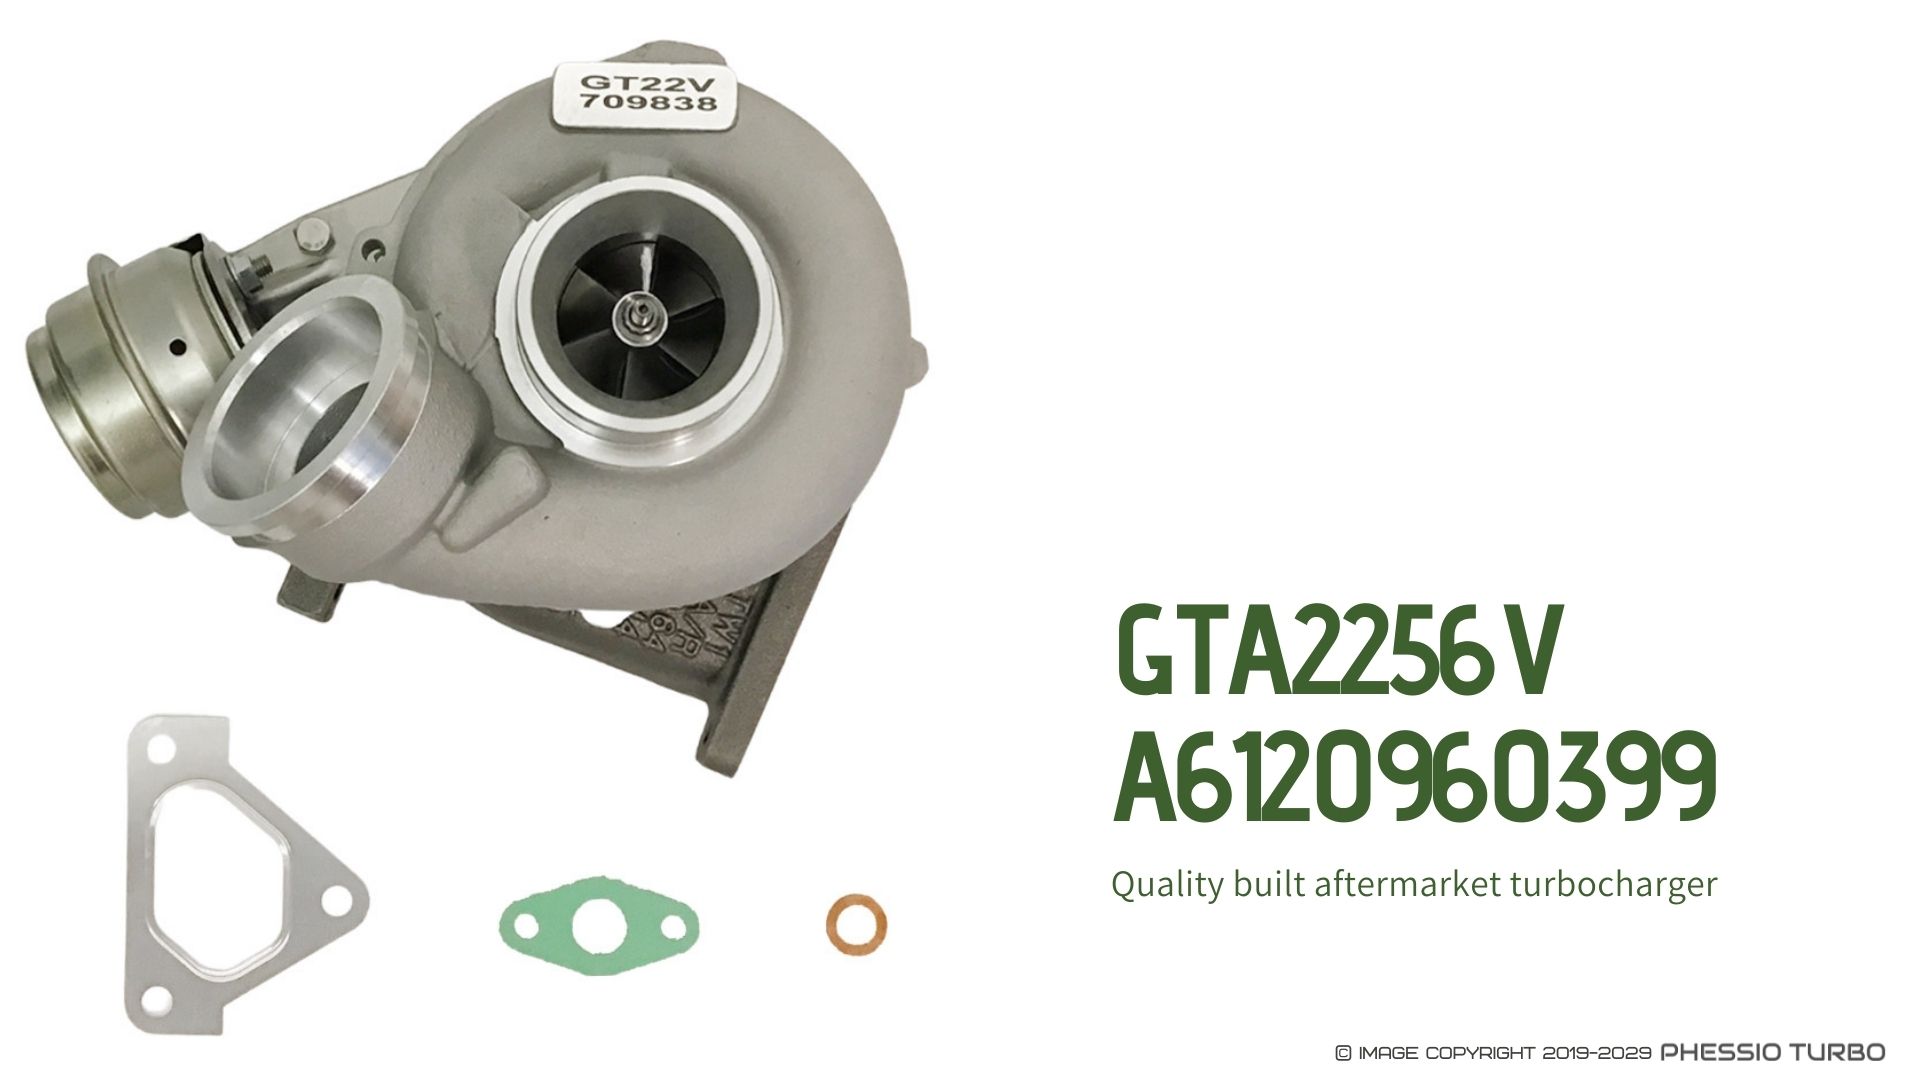 A6120960399 709838 Turbochargeer For Mercedes Sprinter Om612 Engine